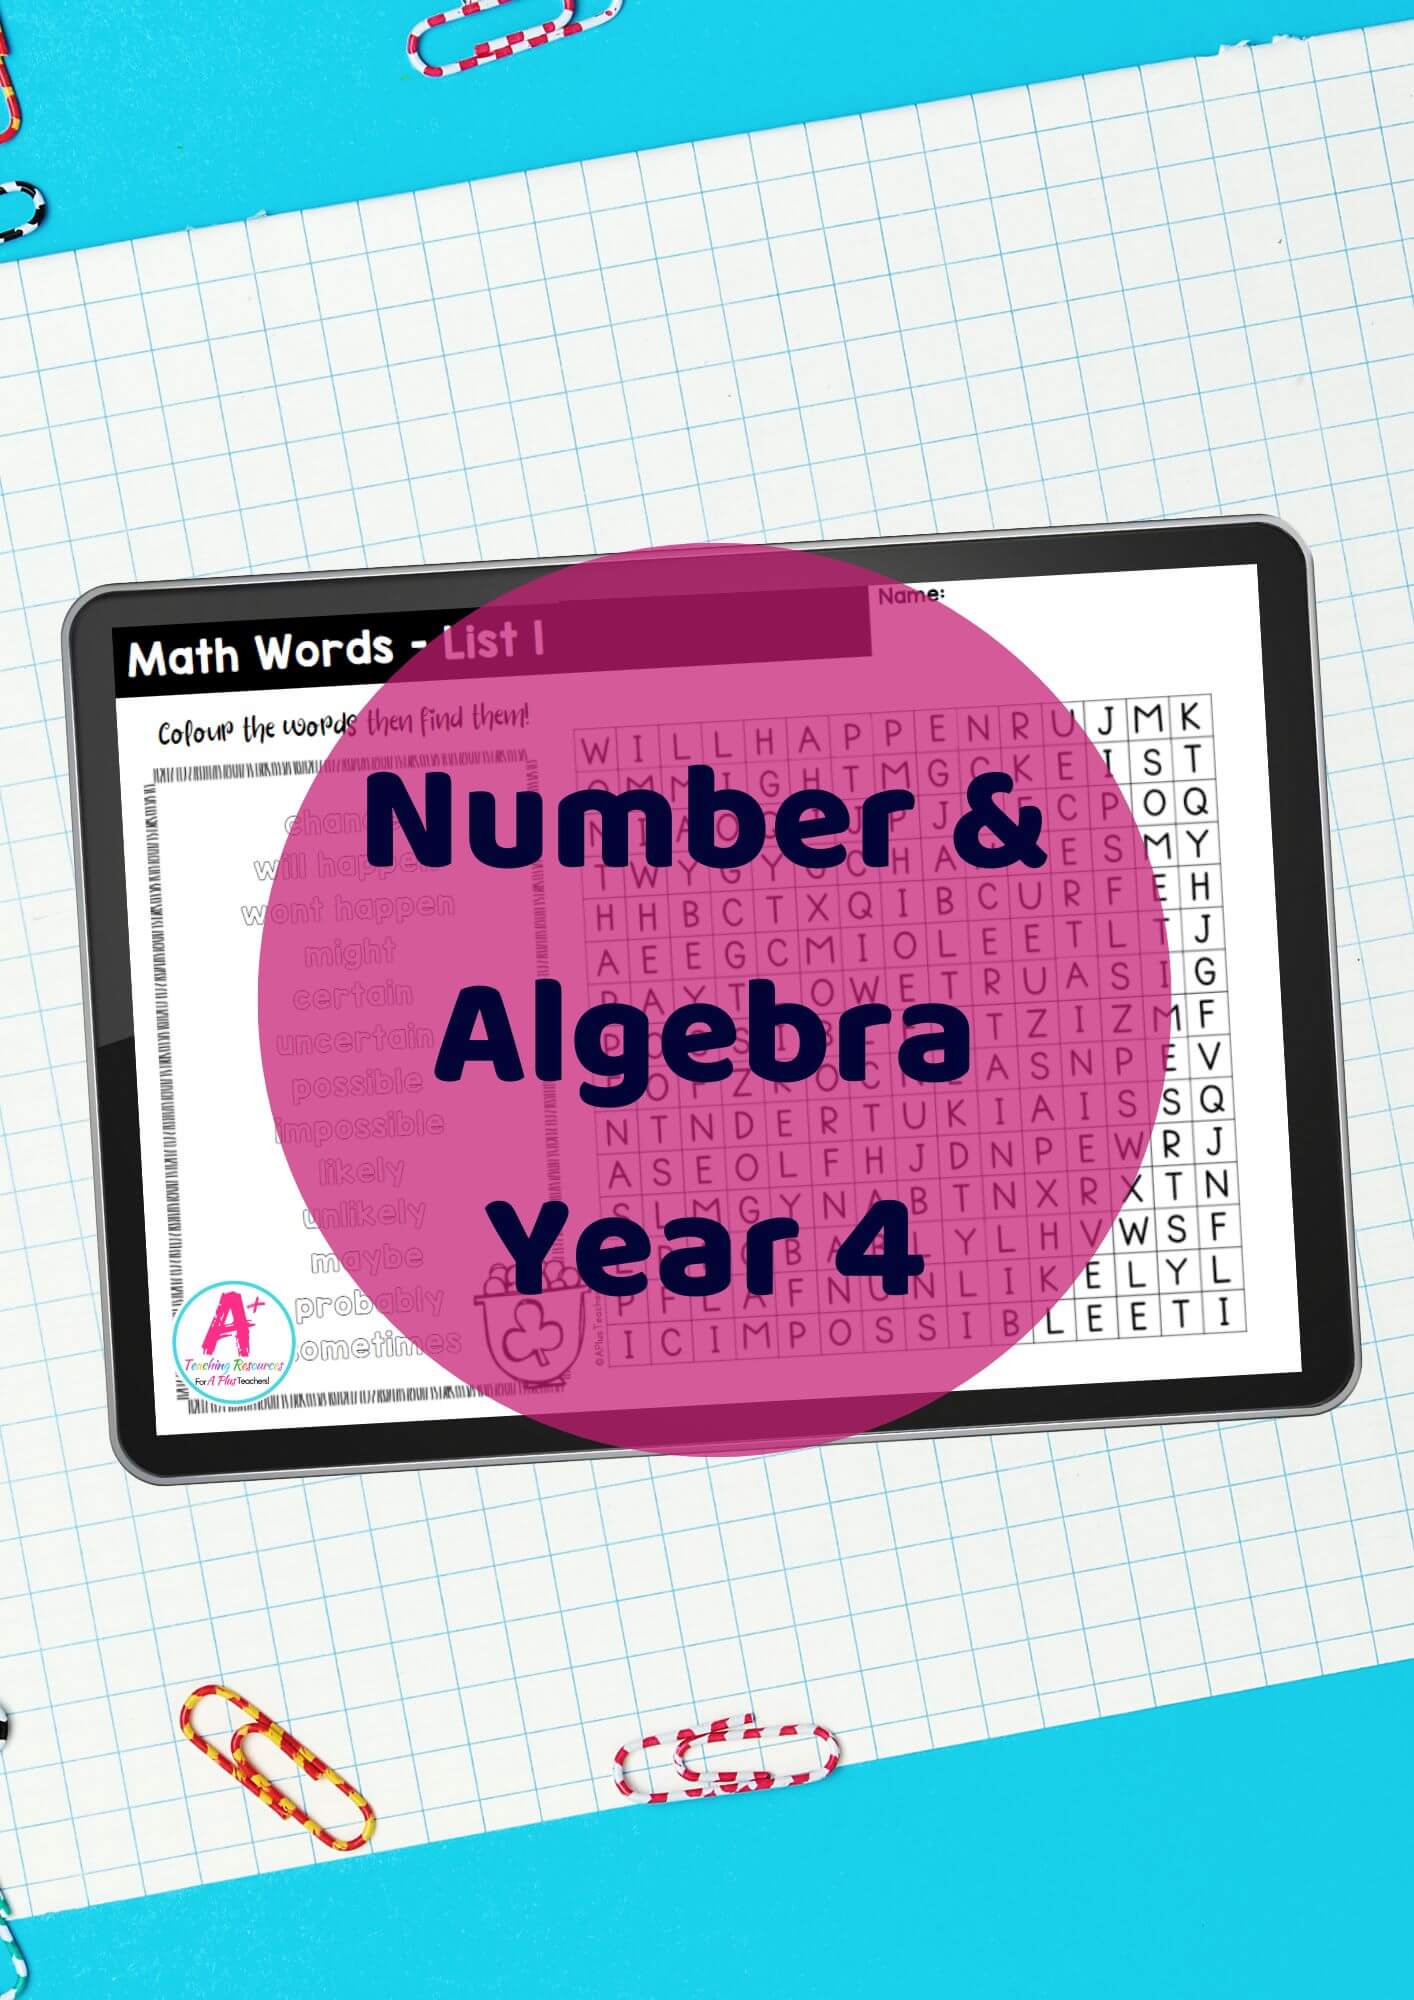 Number & Algebra Vocabulary POWERPOINT - Year 4